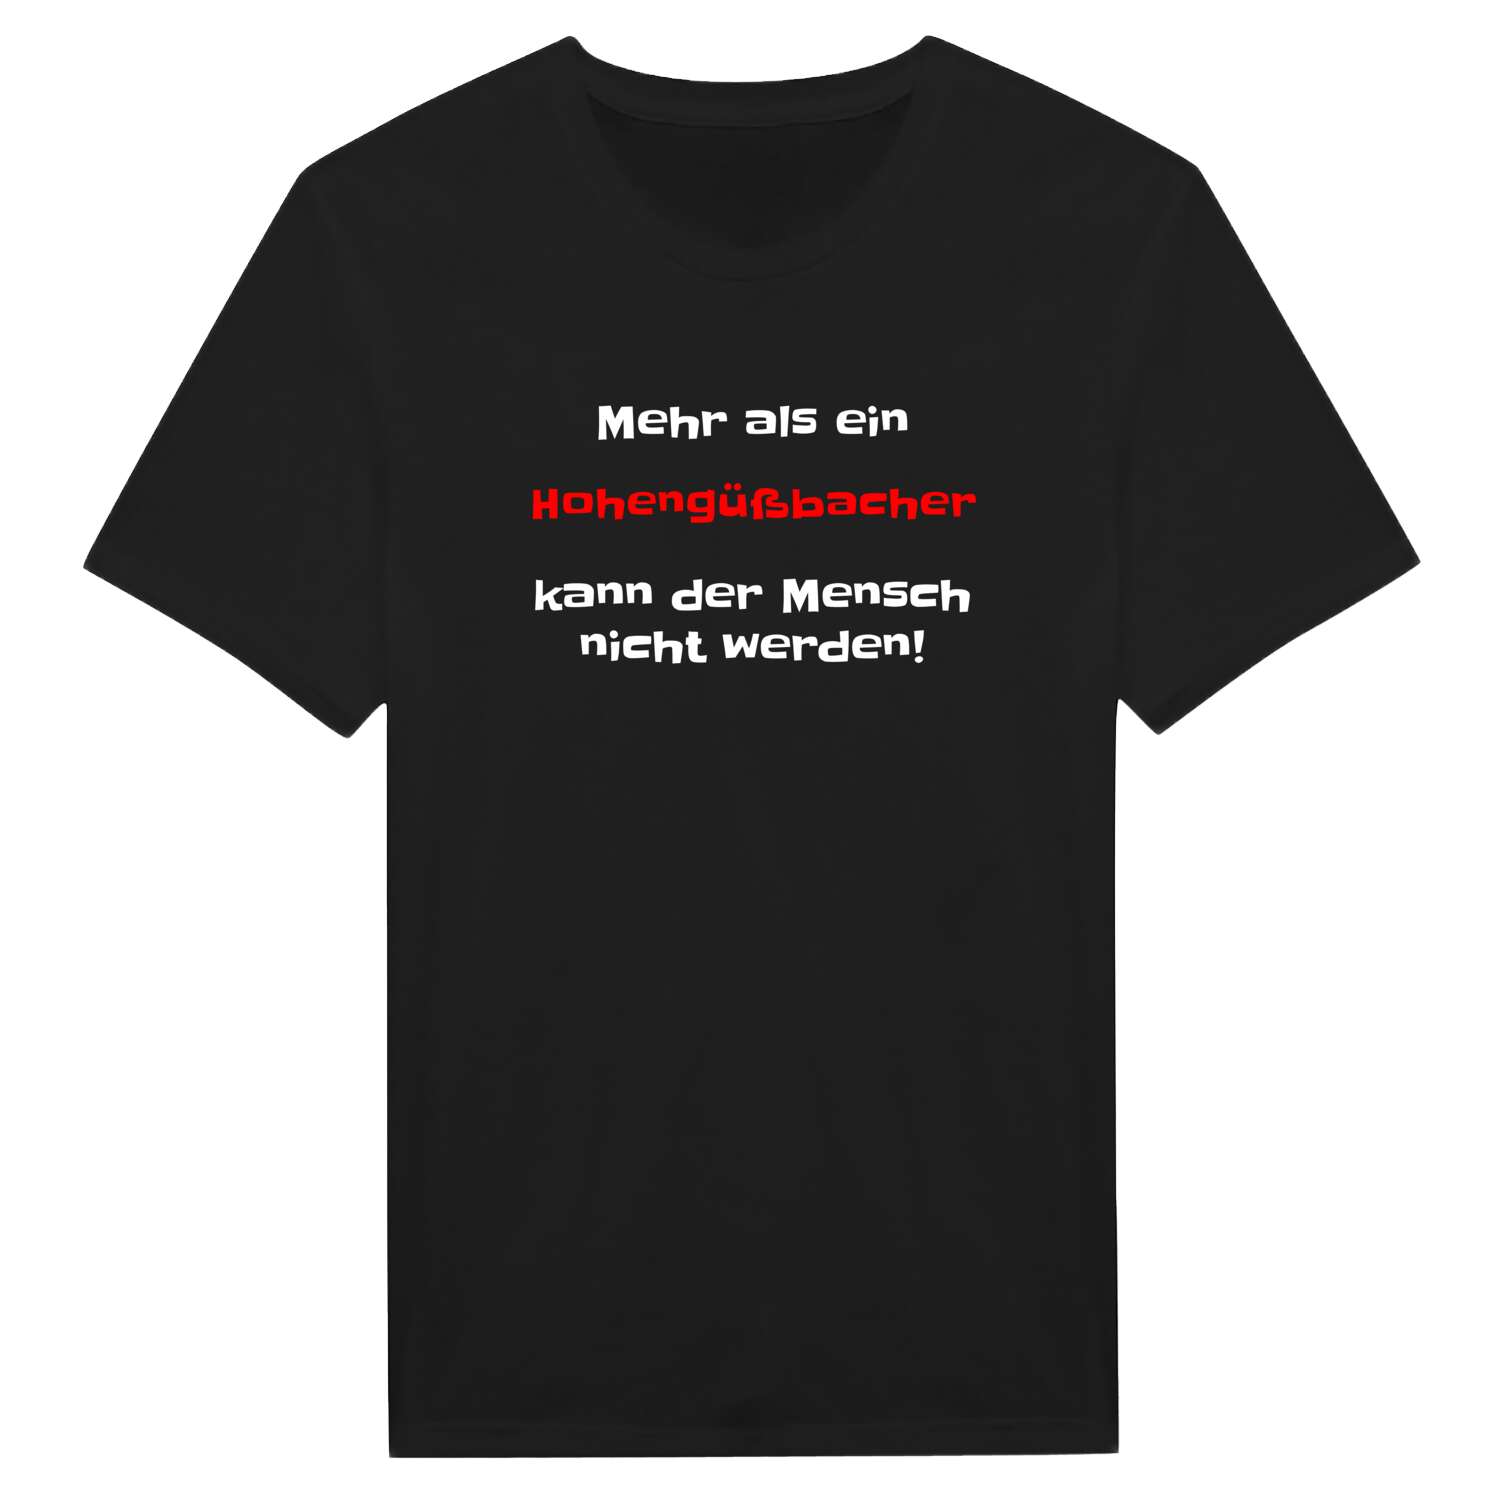 Hohengüßbach T-Shirt »Mehr als ein«